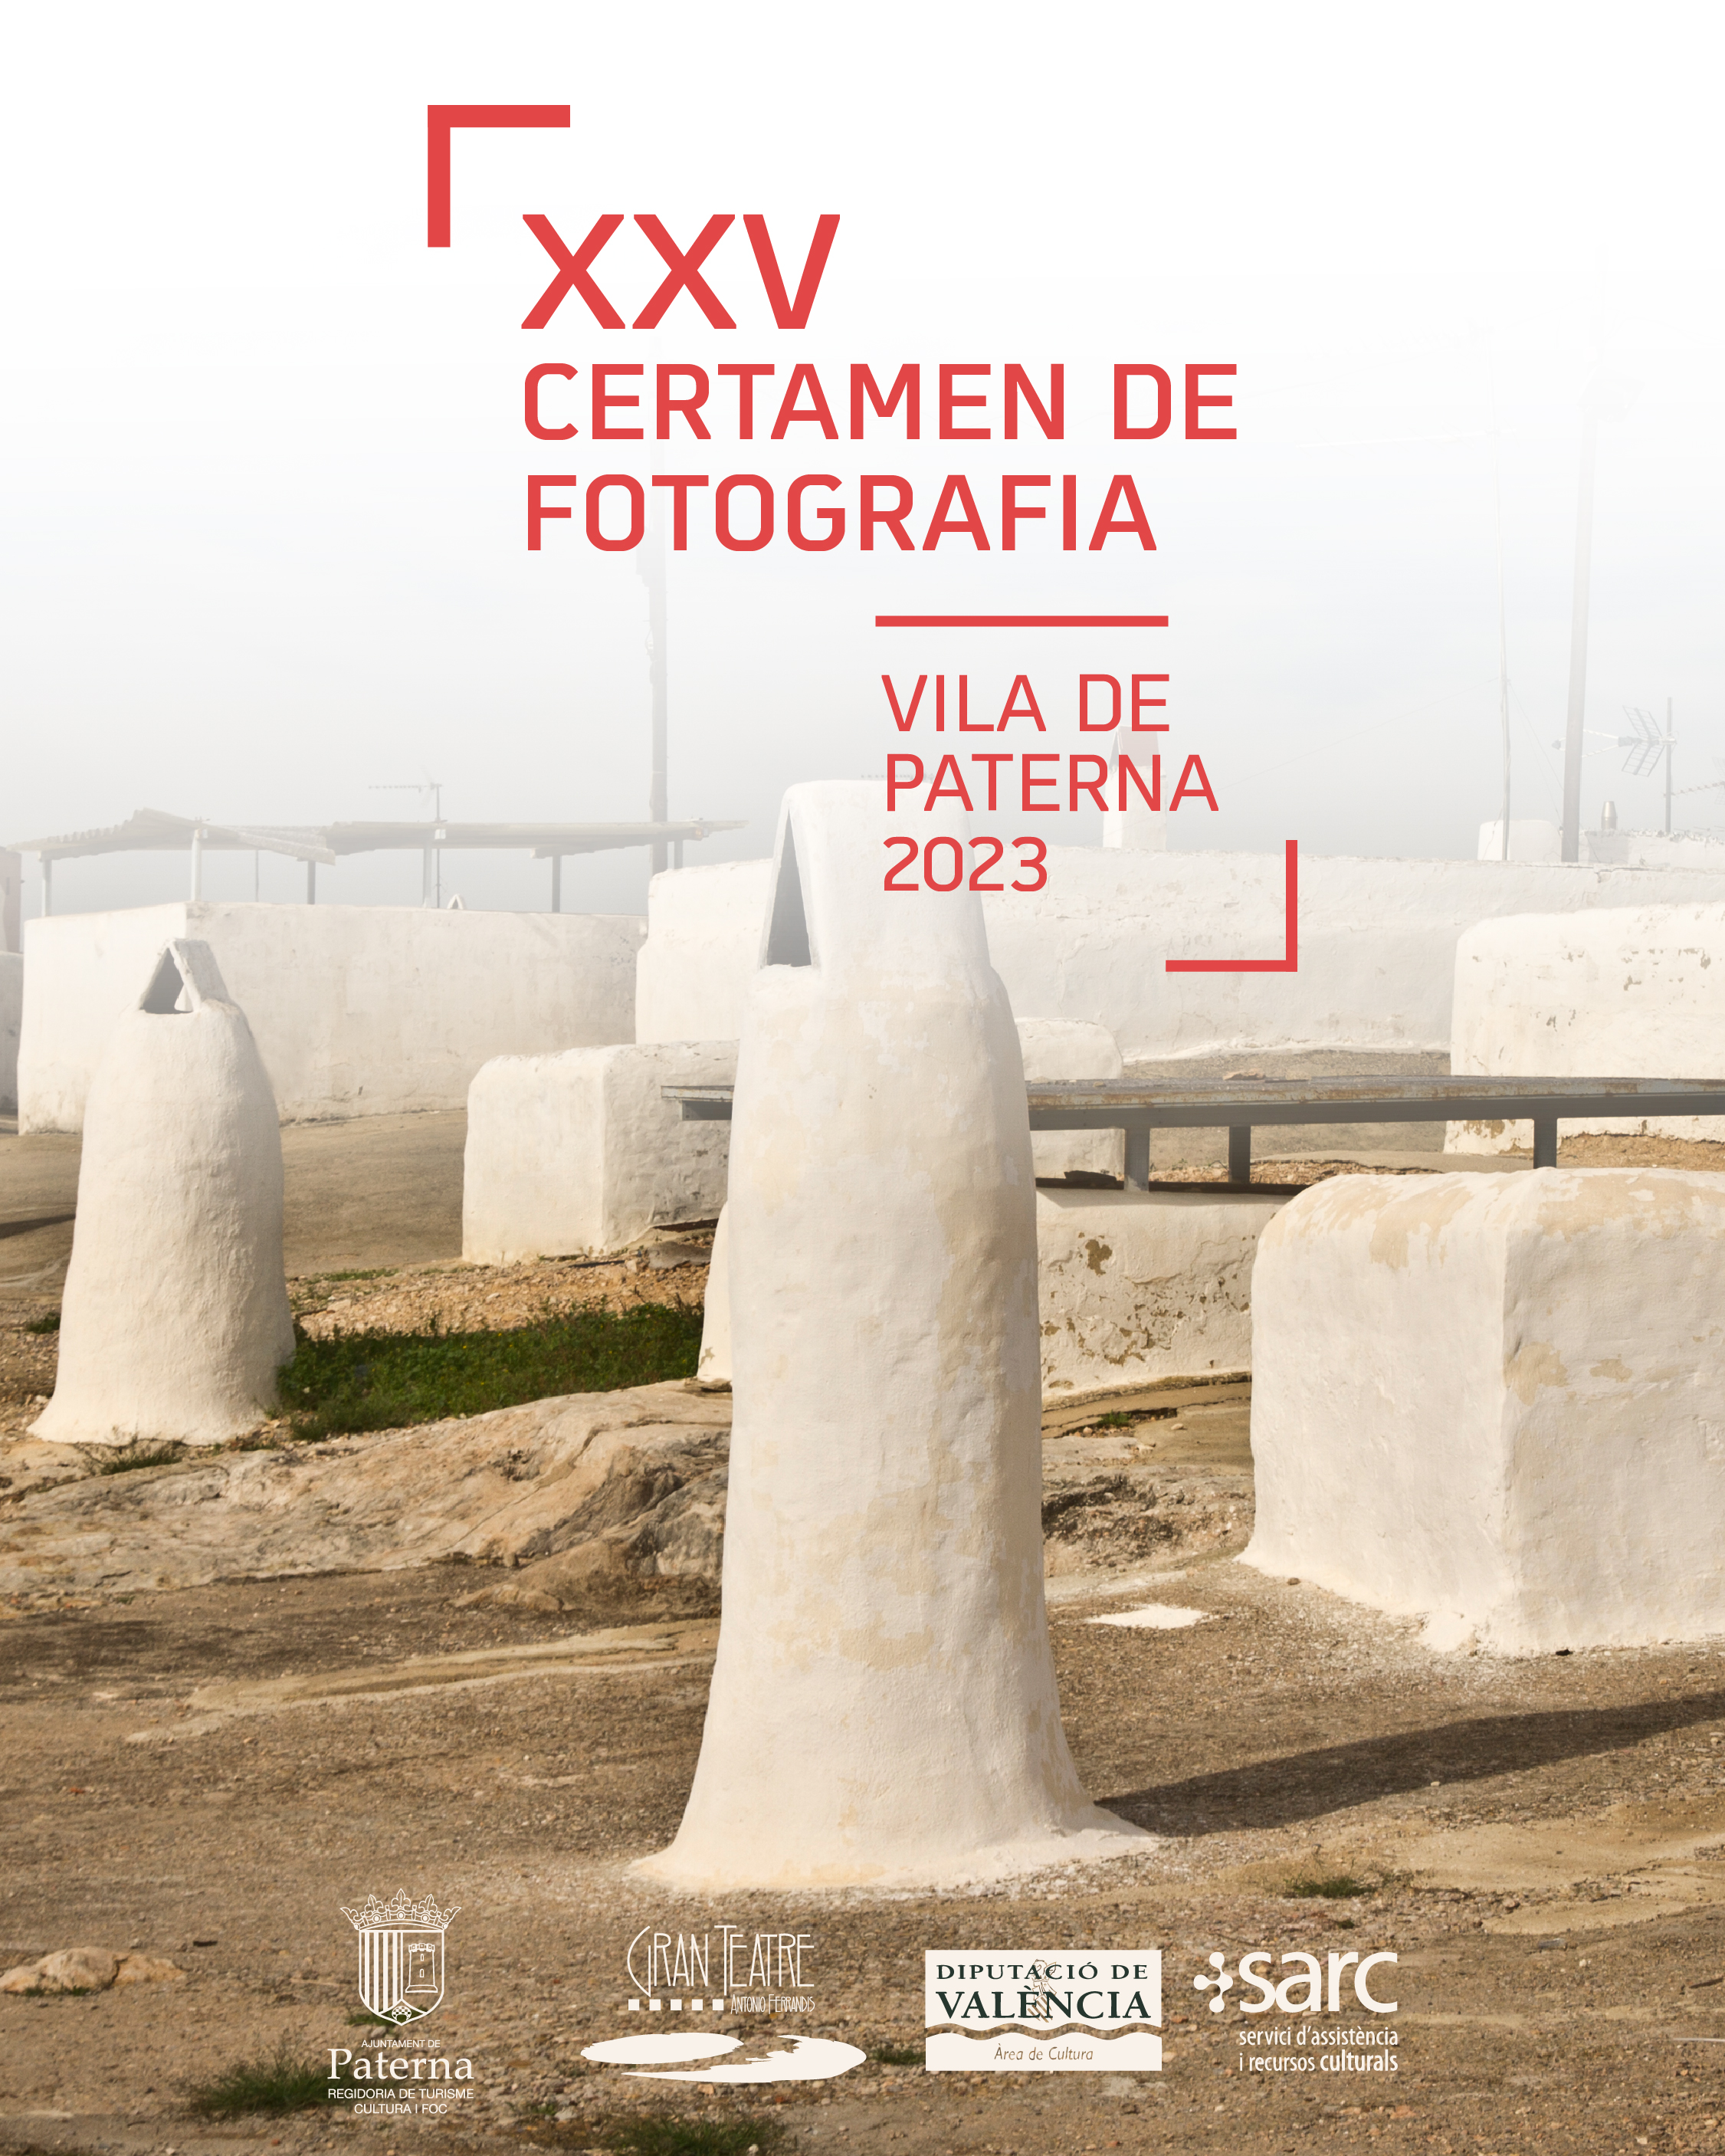 XXV Certamen de Fotografia Vila de Paterna